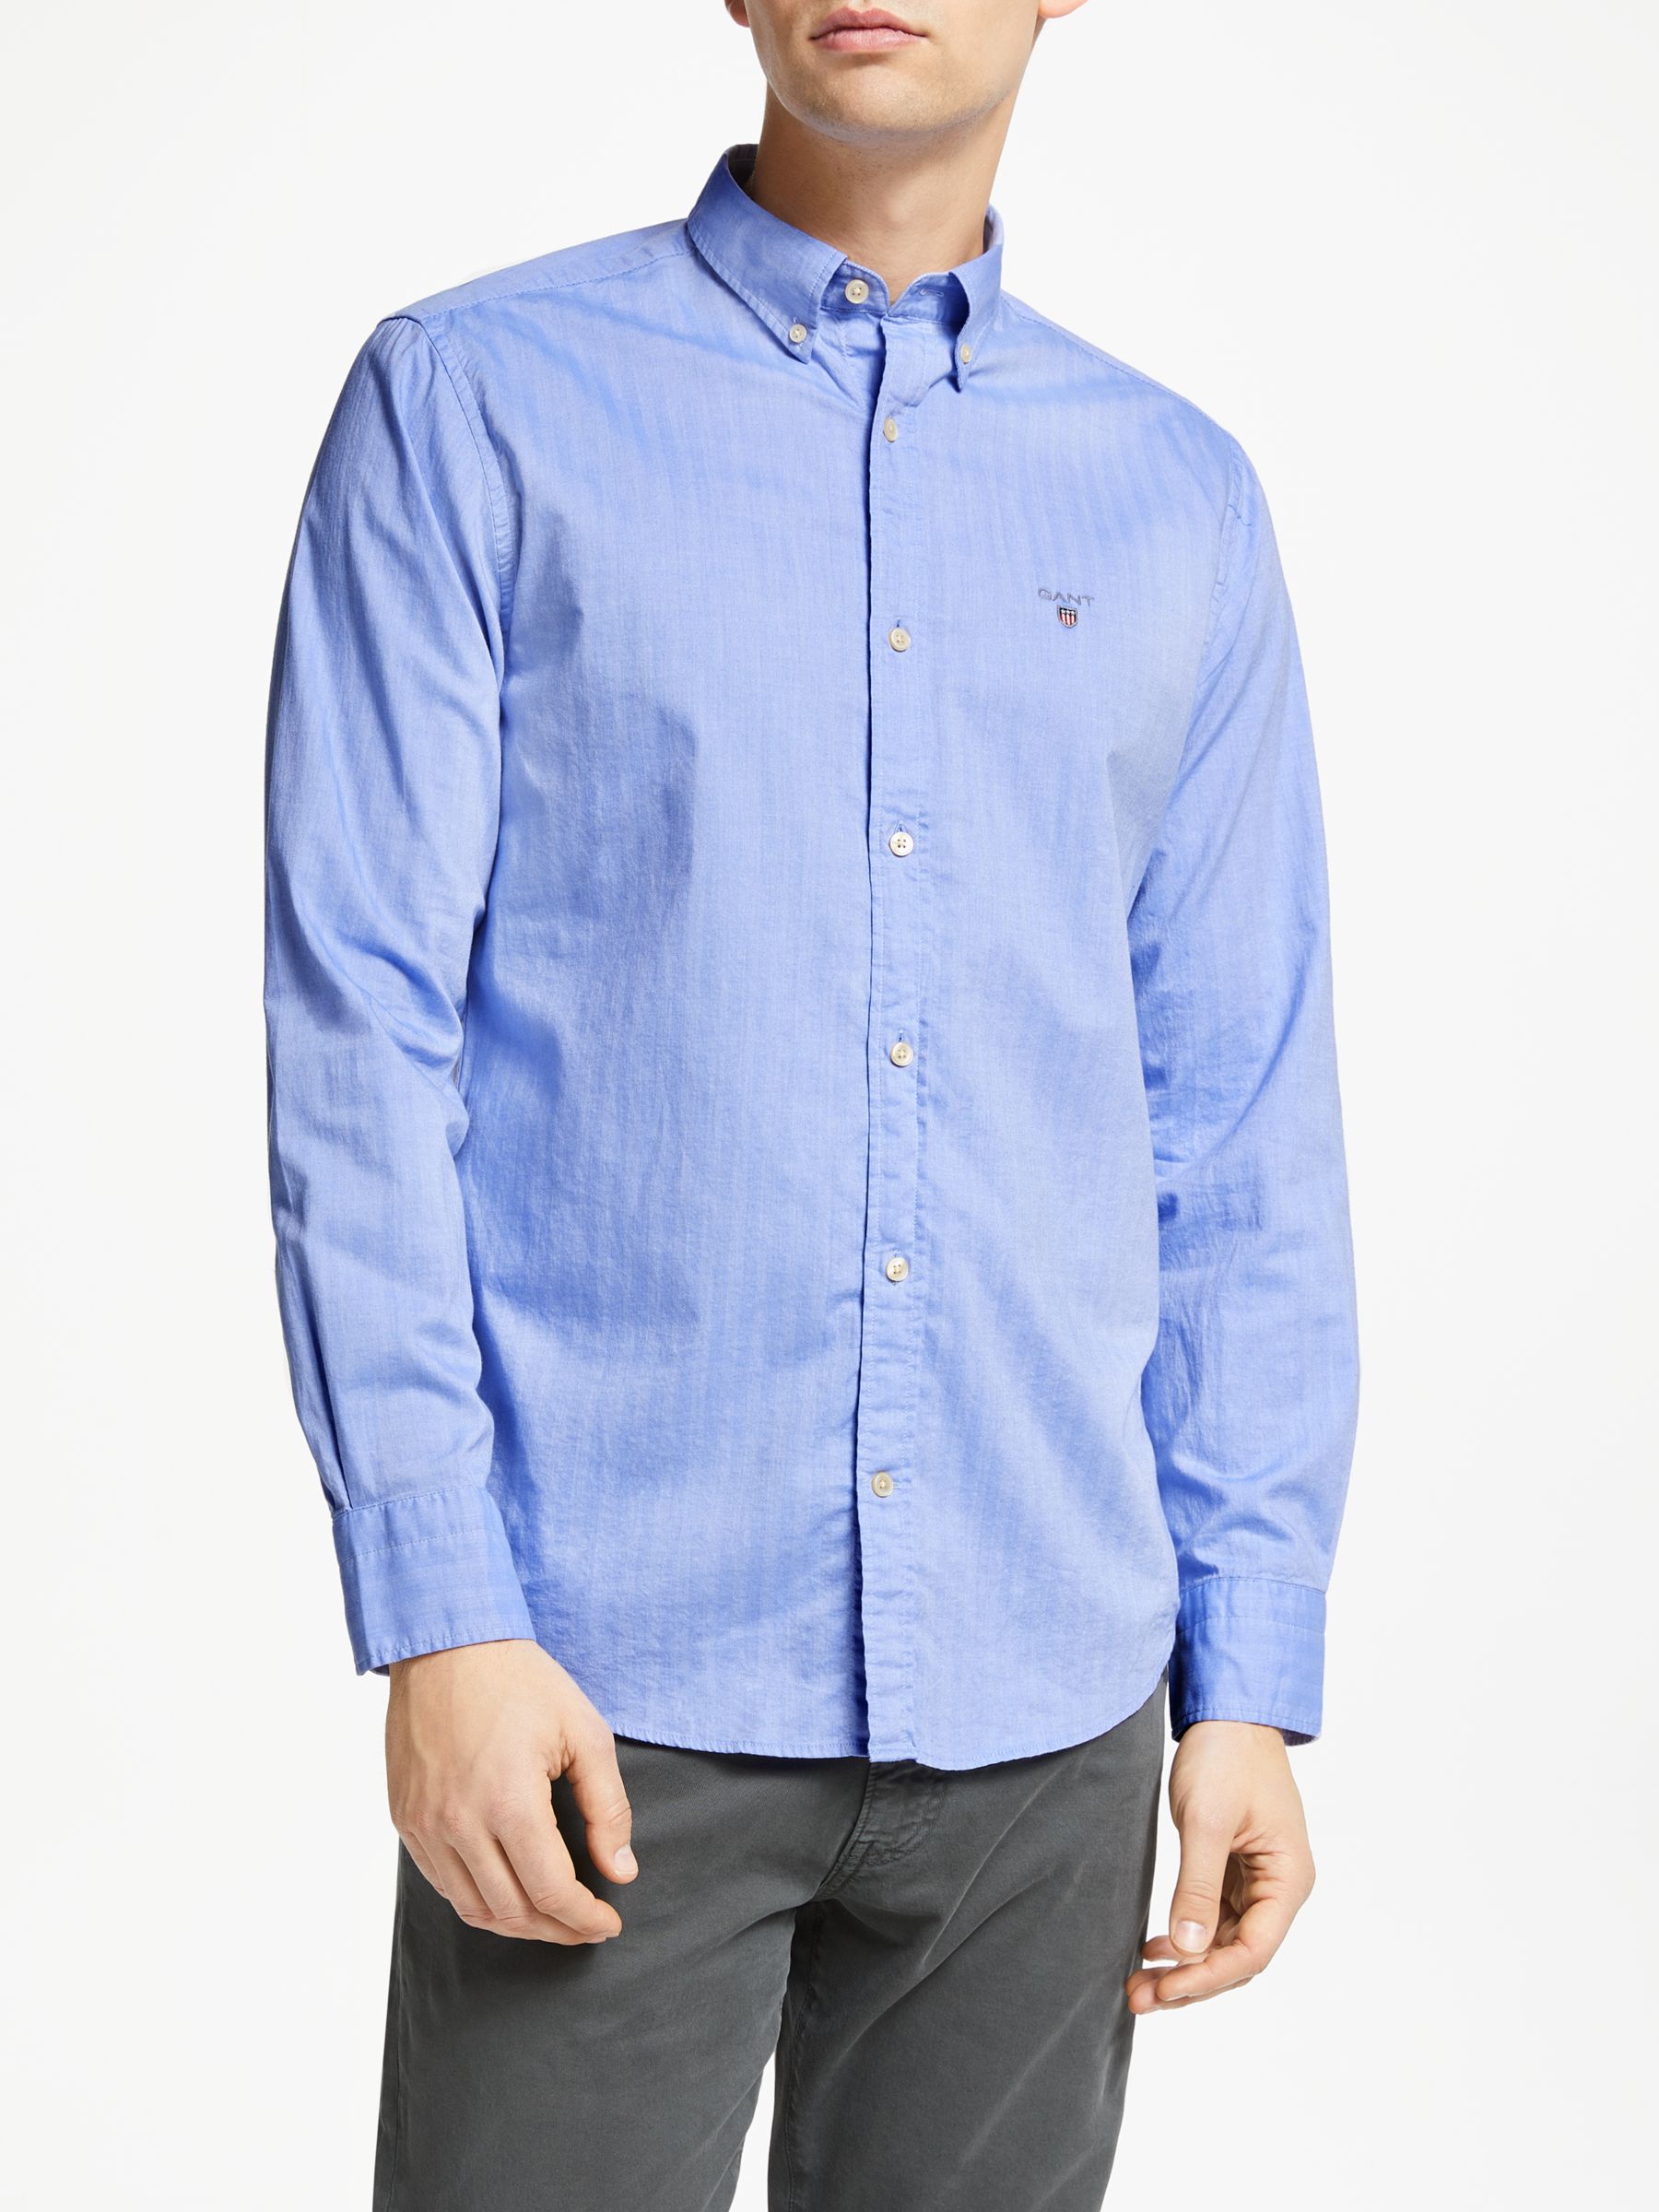 GANT Herringbone Regular Fit Shirt, Blue